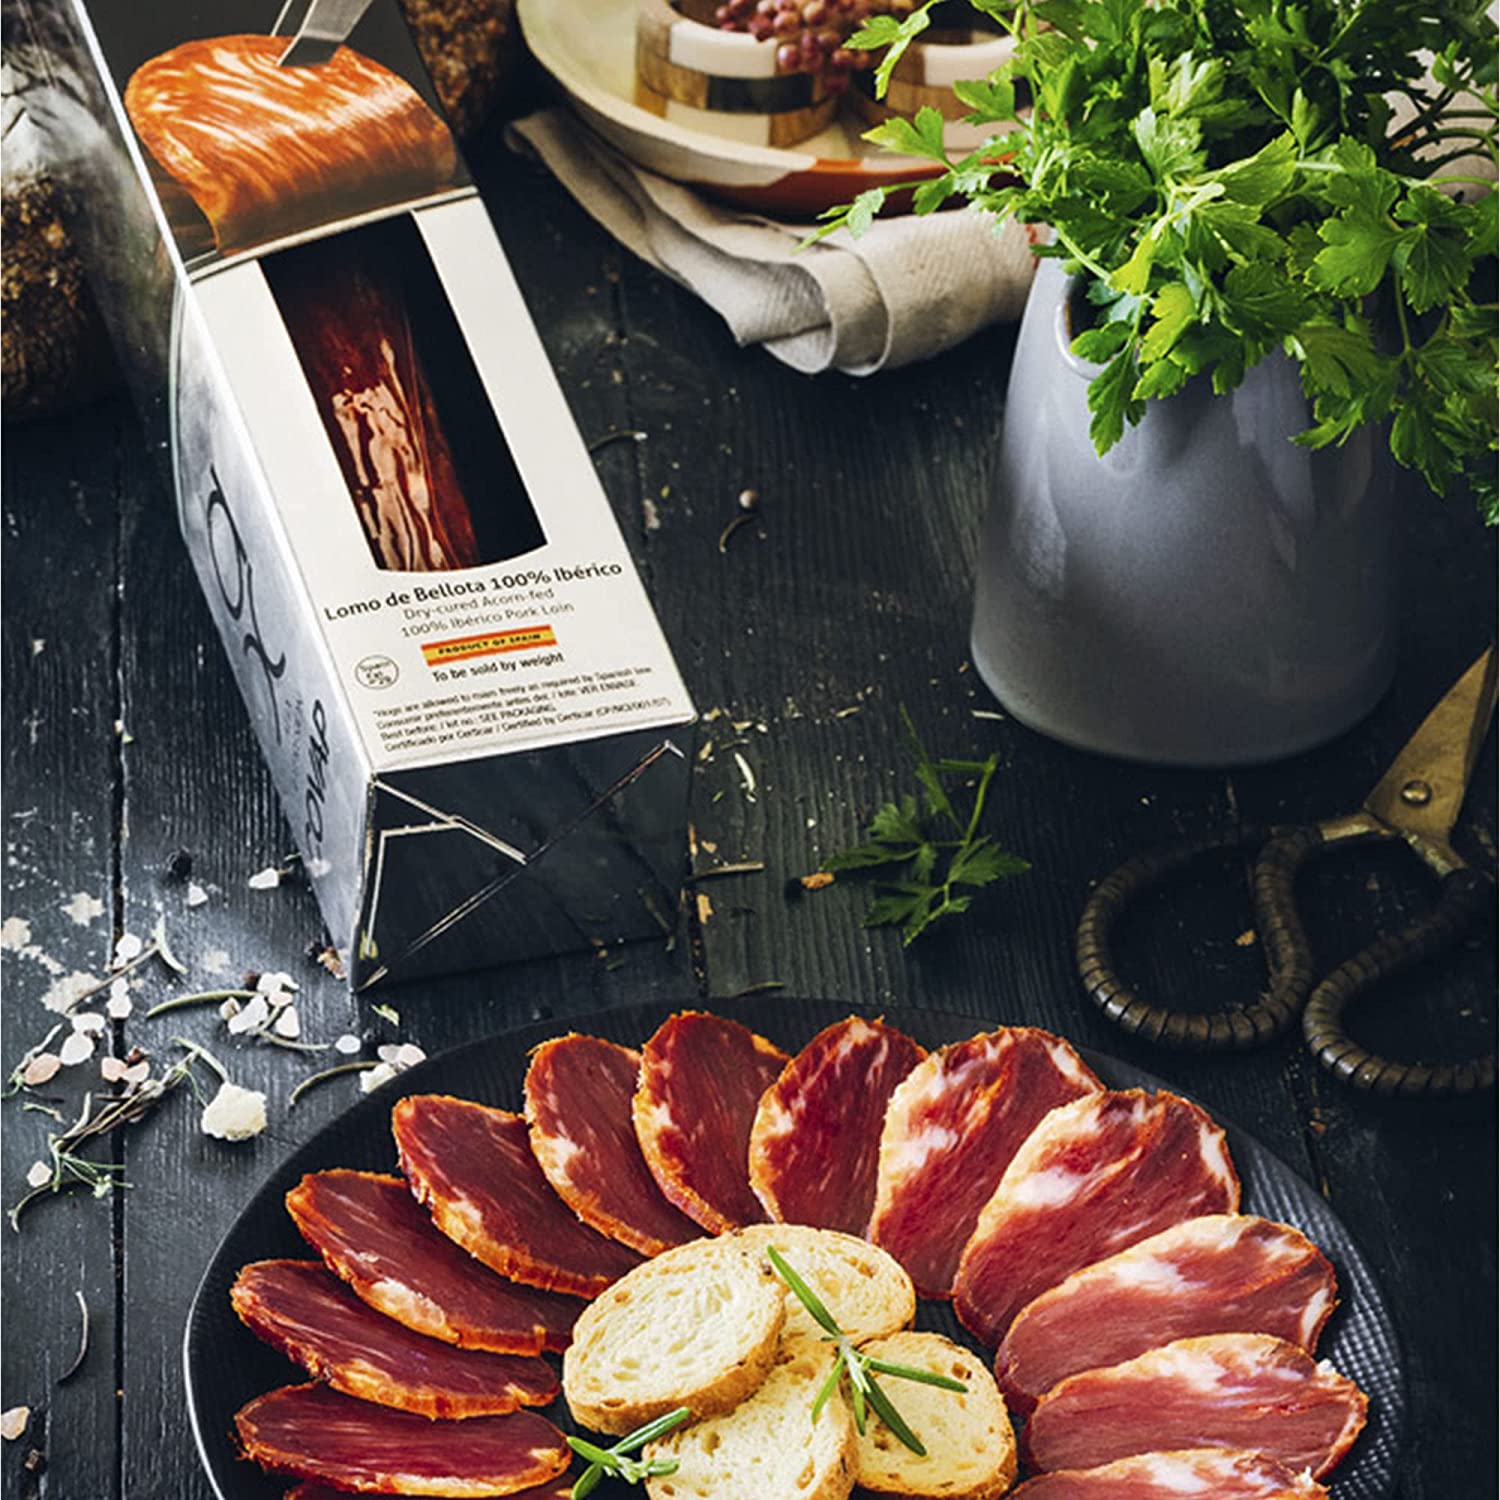 Iberico Pork Loin with original packaging